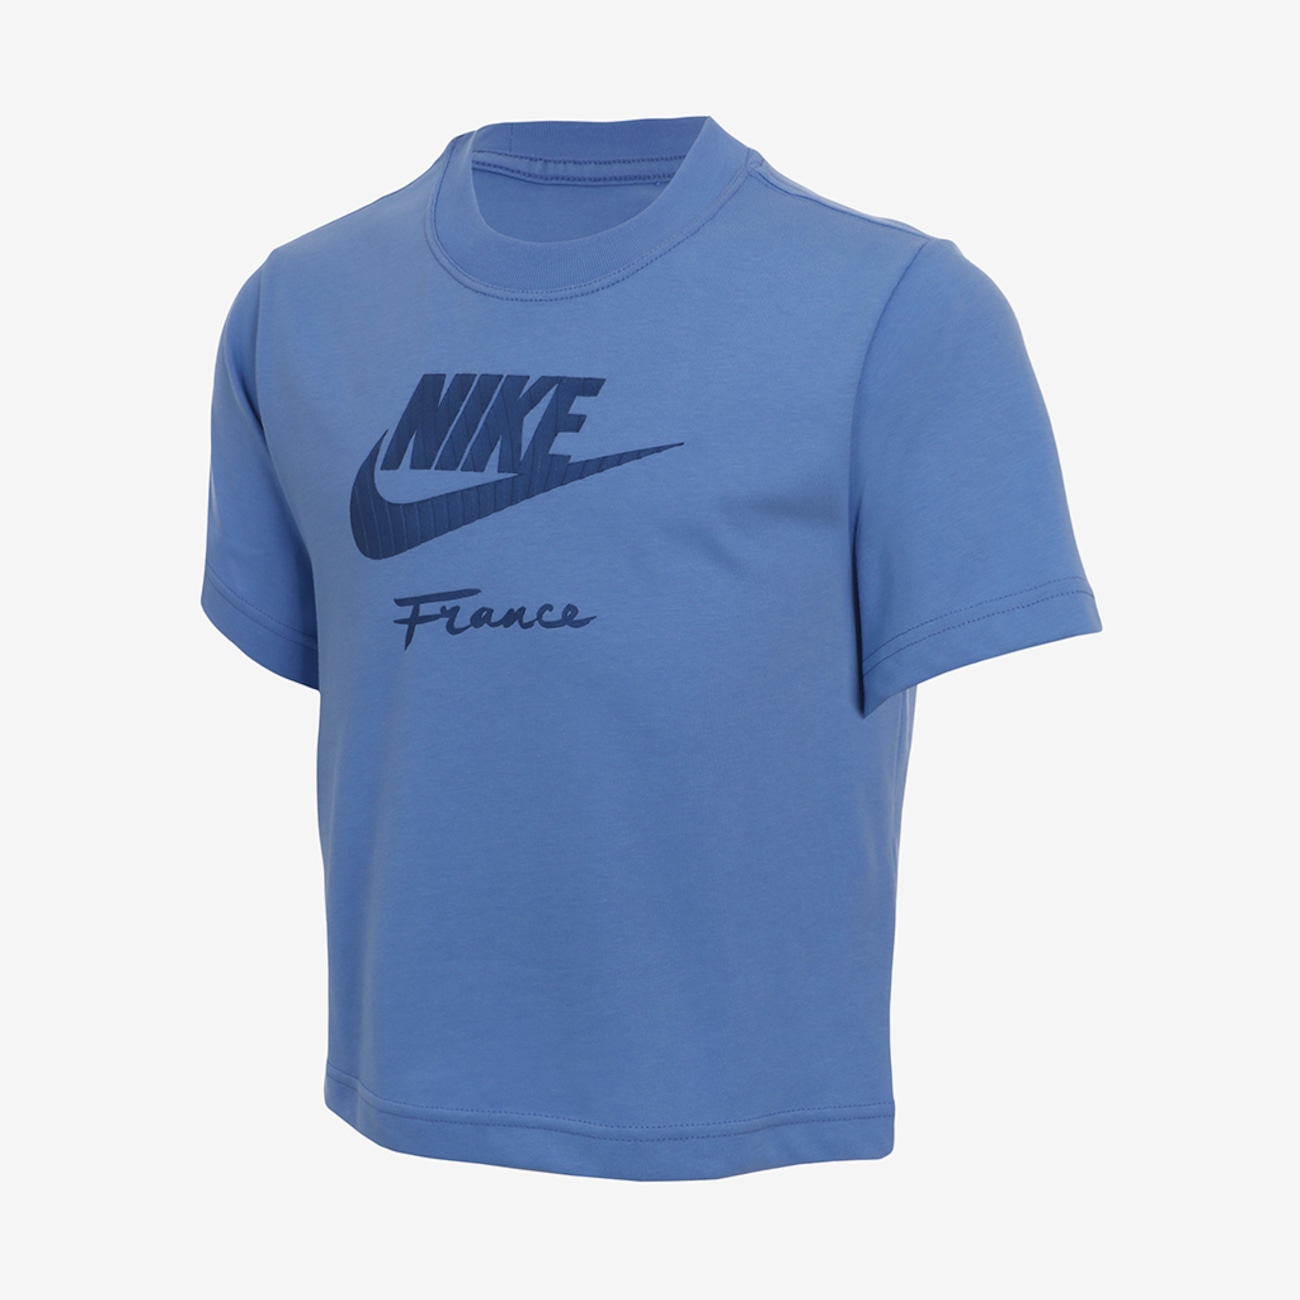 Camiseta Nike França Futura Infantil